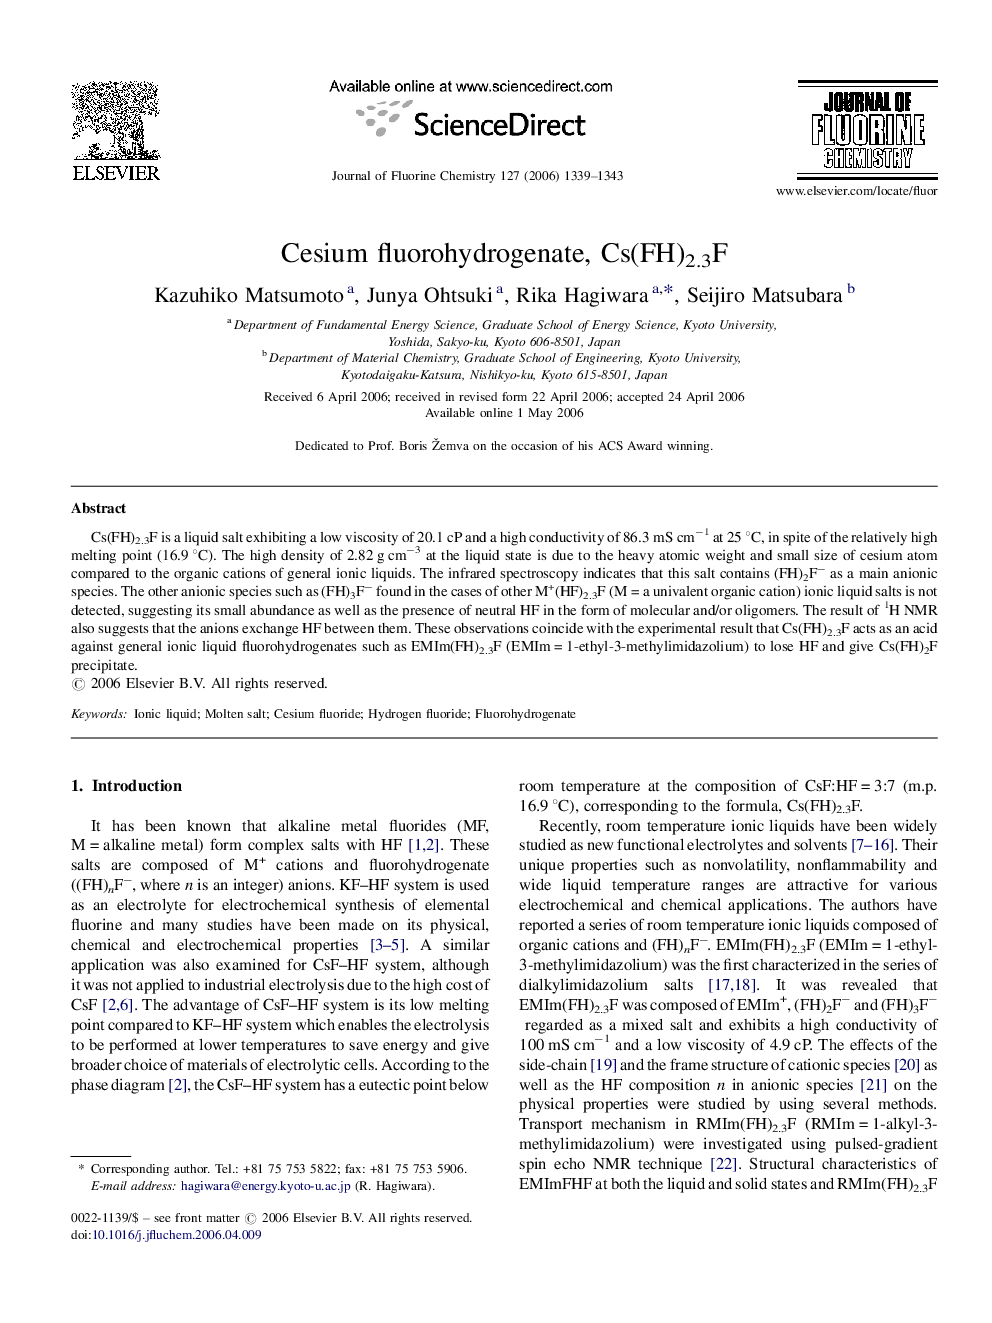 Cesium fluorohydrogenate, Cs(FH)2.3F